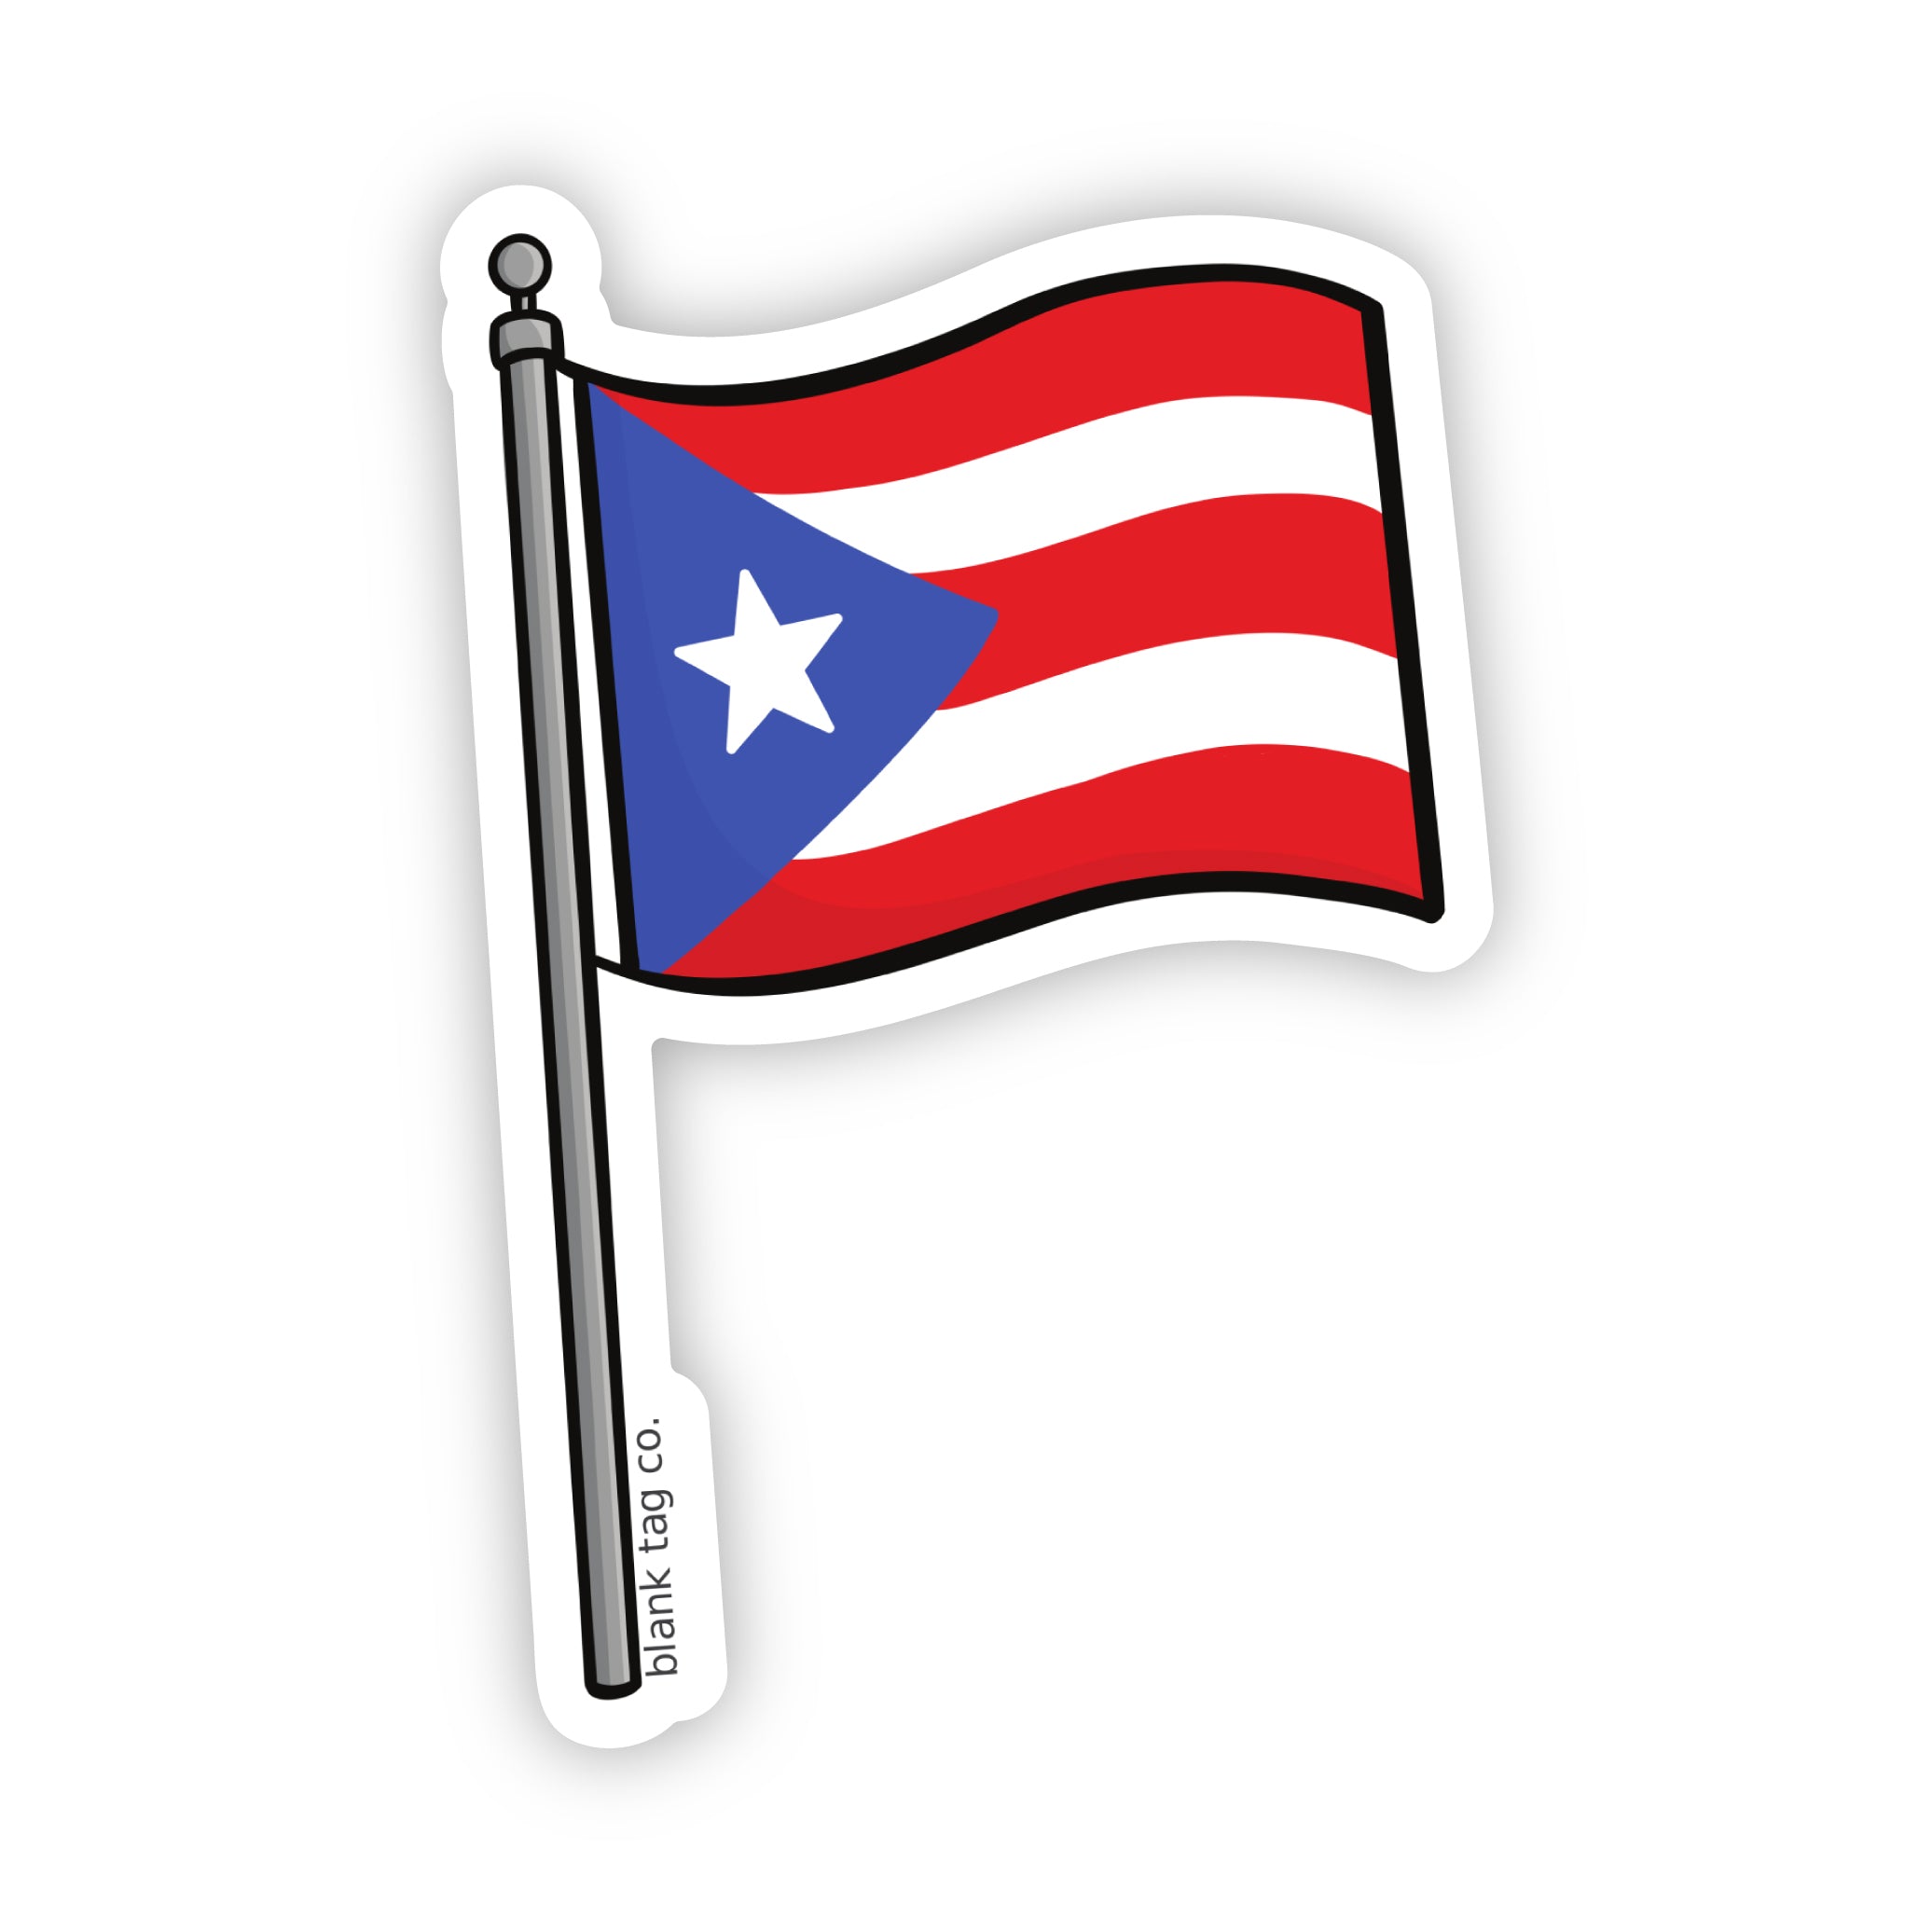 The Puerto Rico Flag Sticker